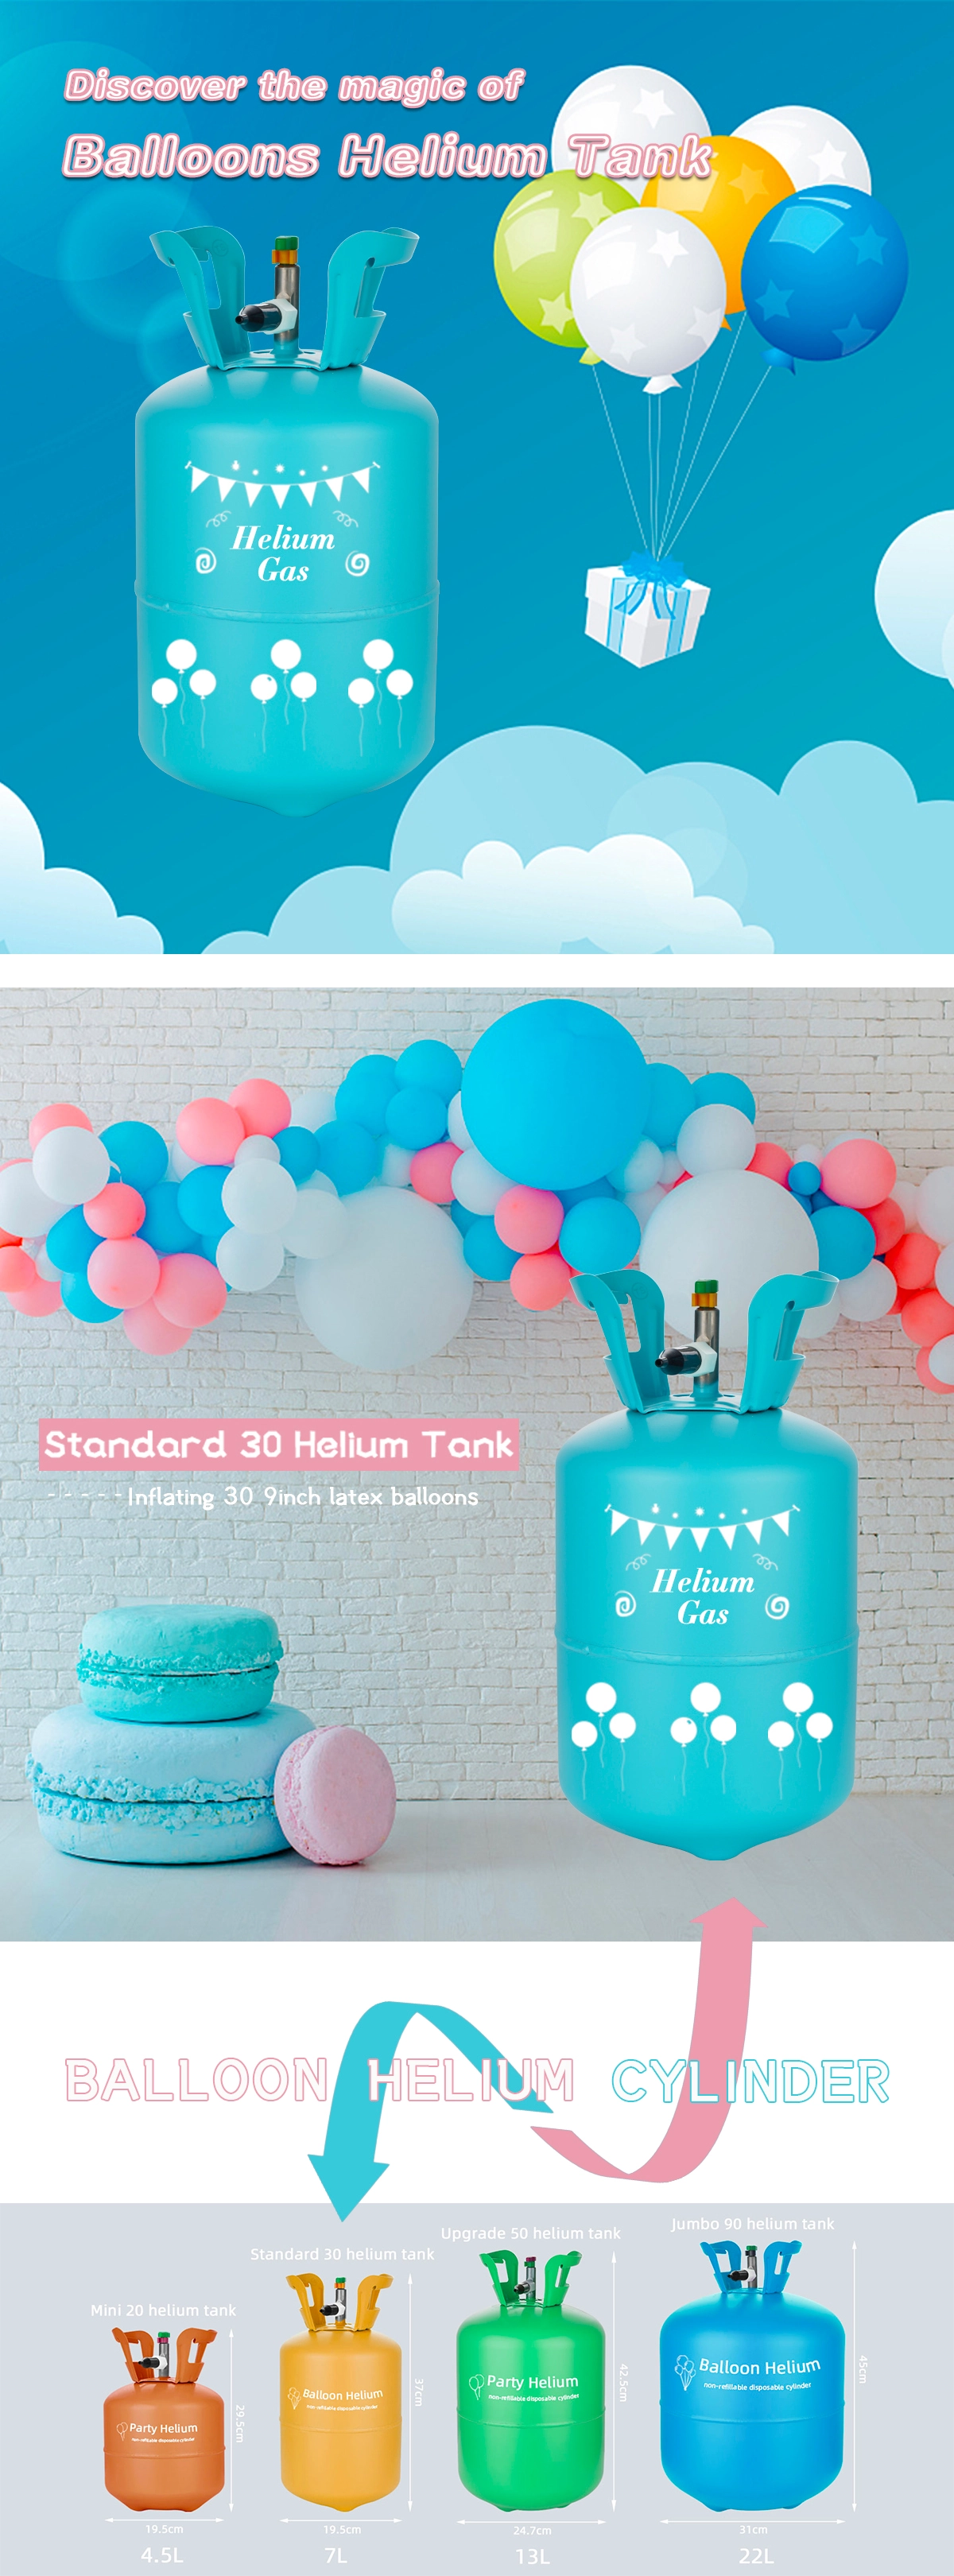 Standard 30 Helium Balloons Tank